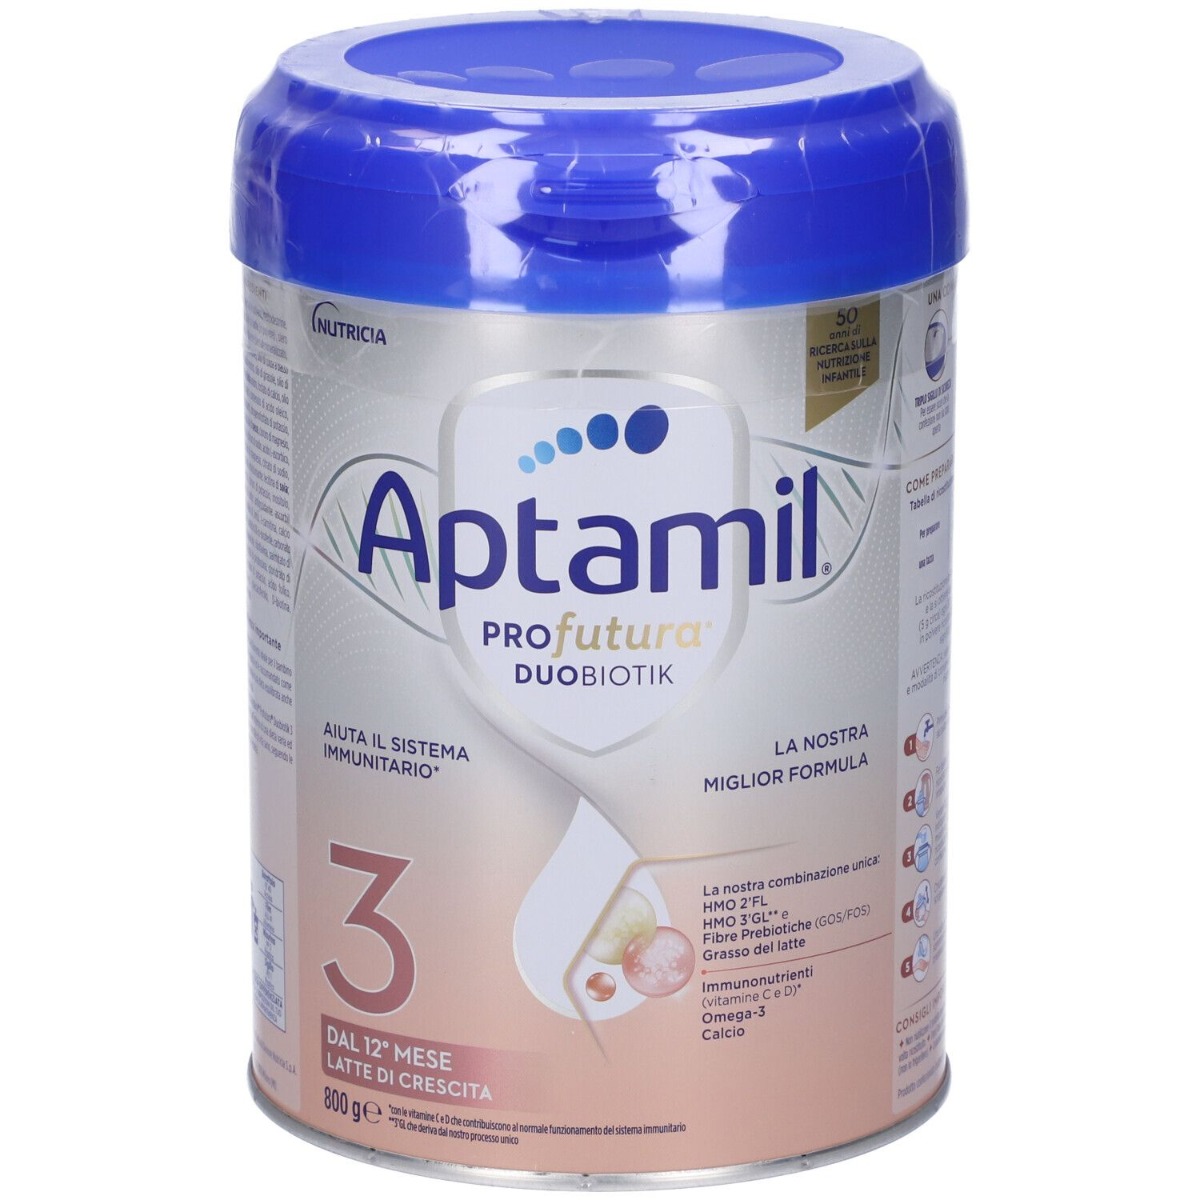 Aptamil 2 Latte di proseguimento dal 6° Mese 750g